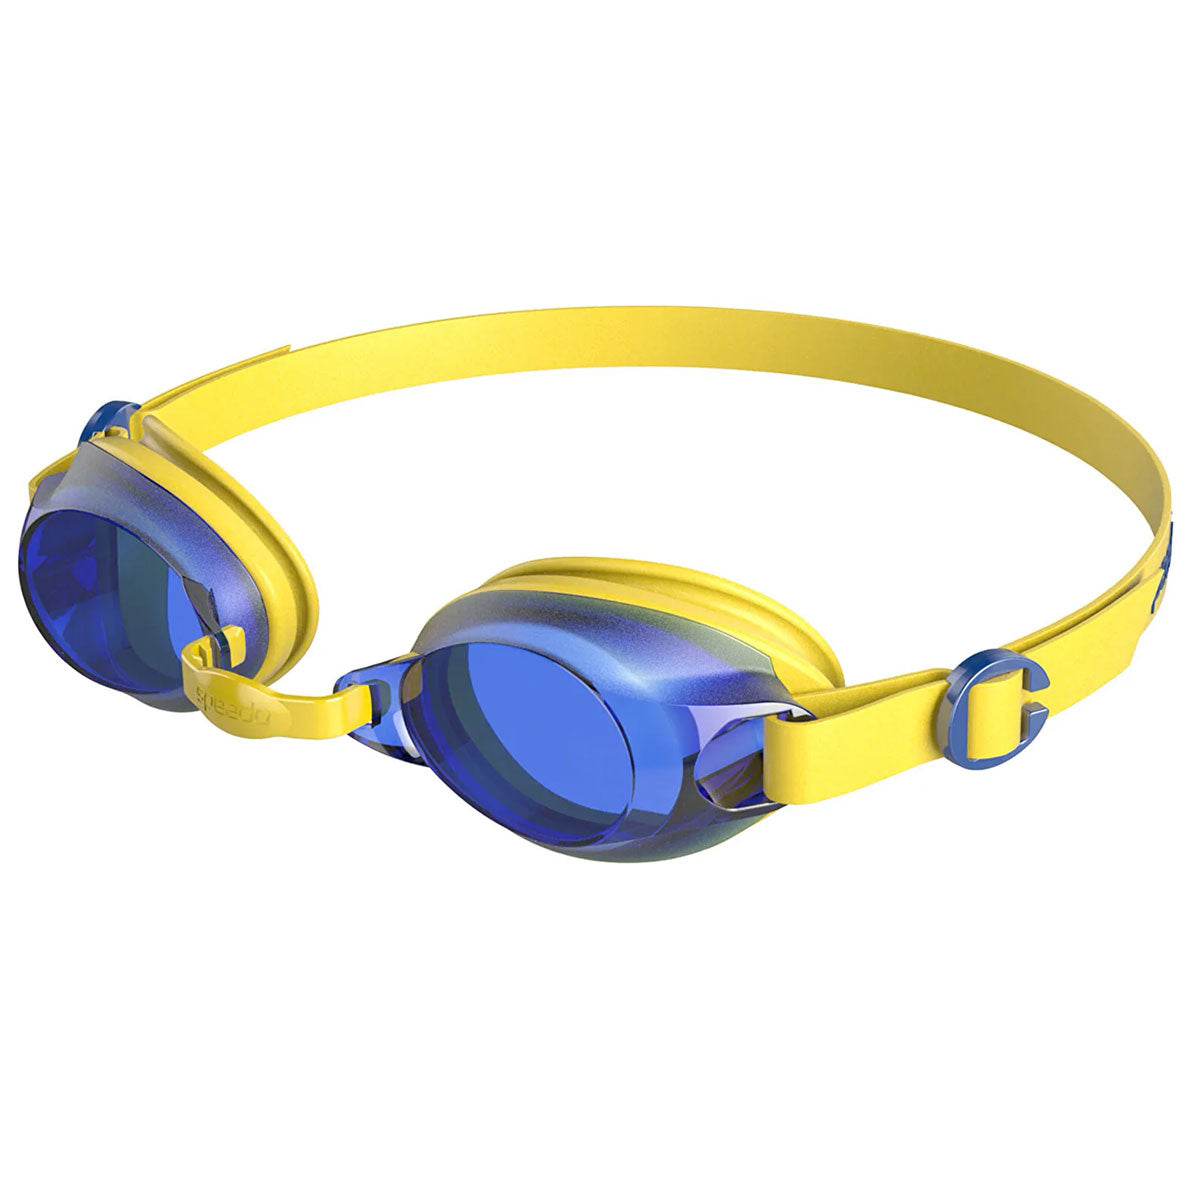 Speedo Jet V2 Goggles - Youth - Empire Yellow/Neon Blue